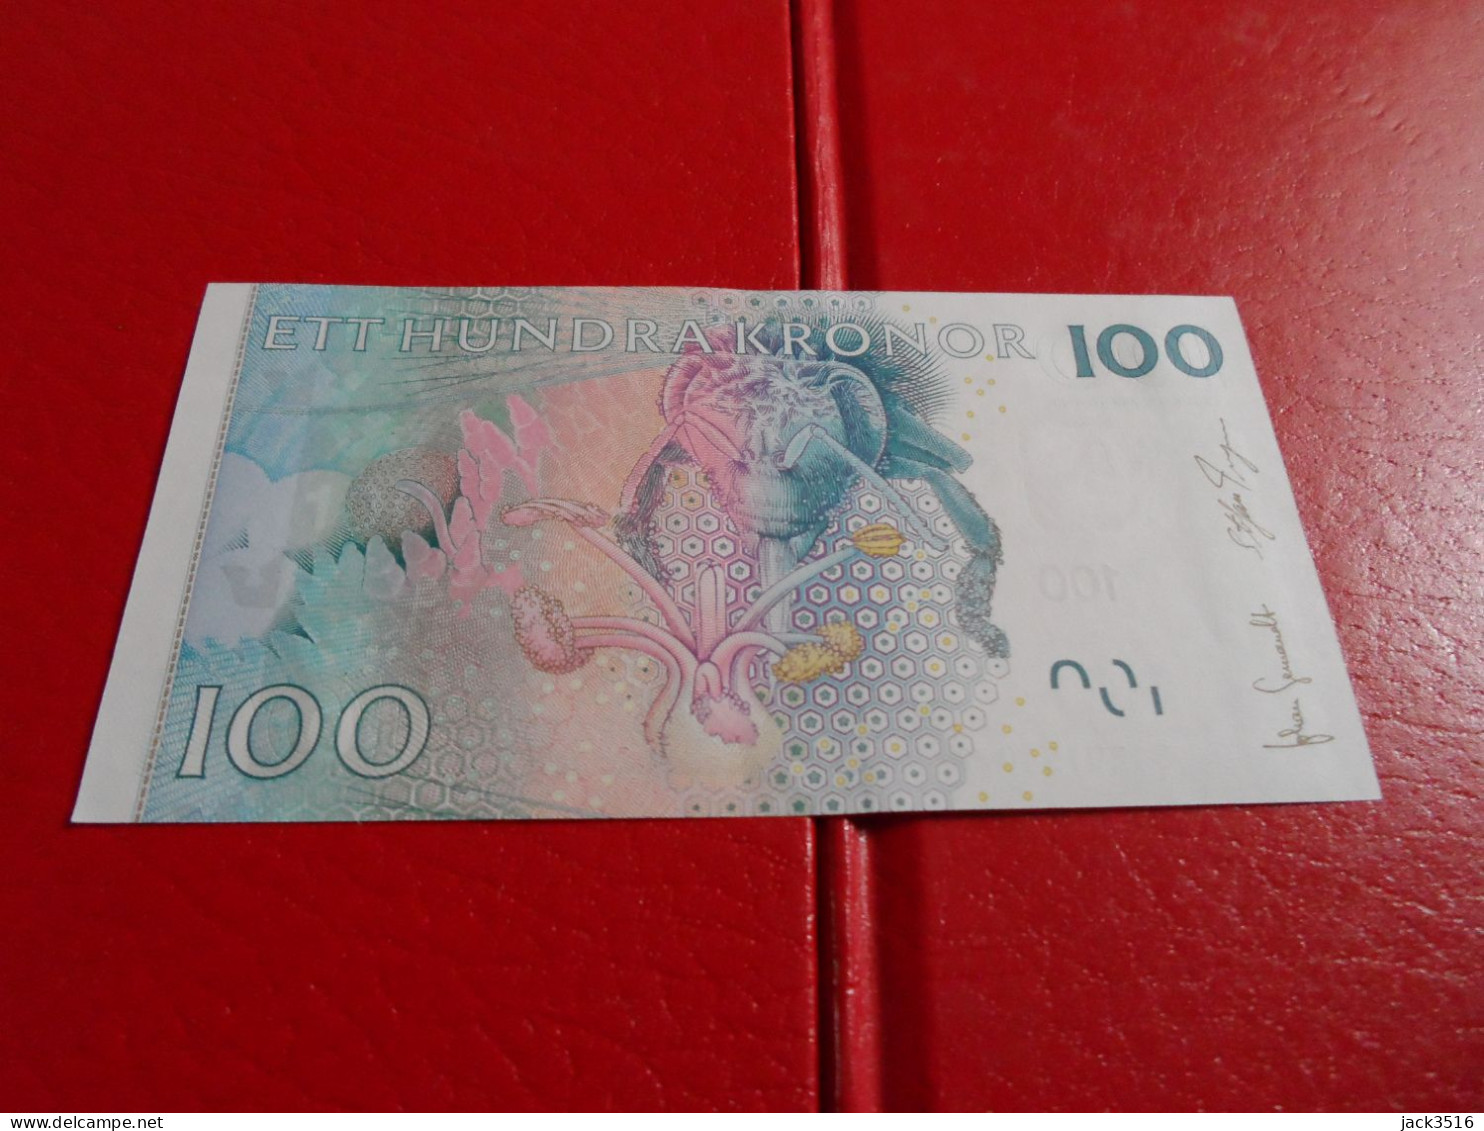 Billet De 100 Kronor Suéde 2001 Neuf 8420154072 - Suède